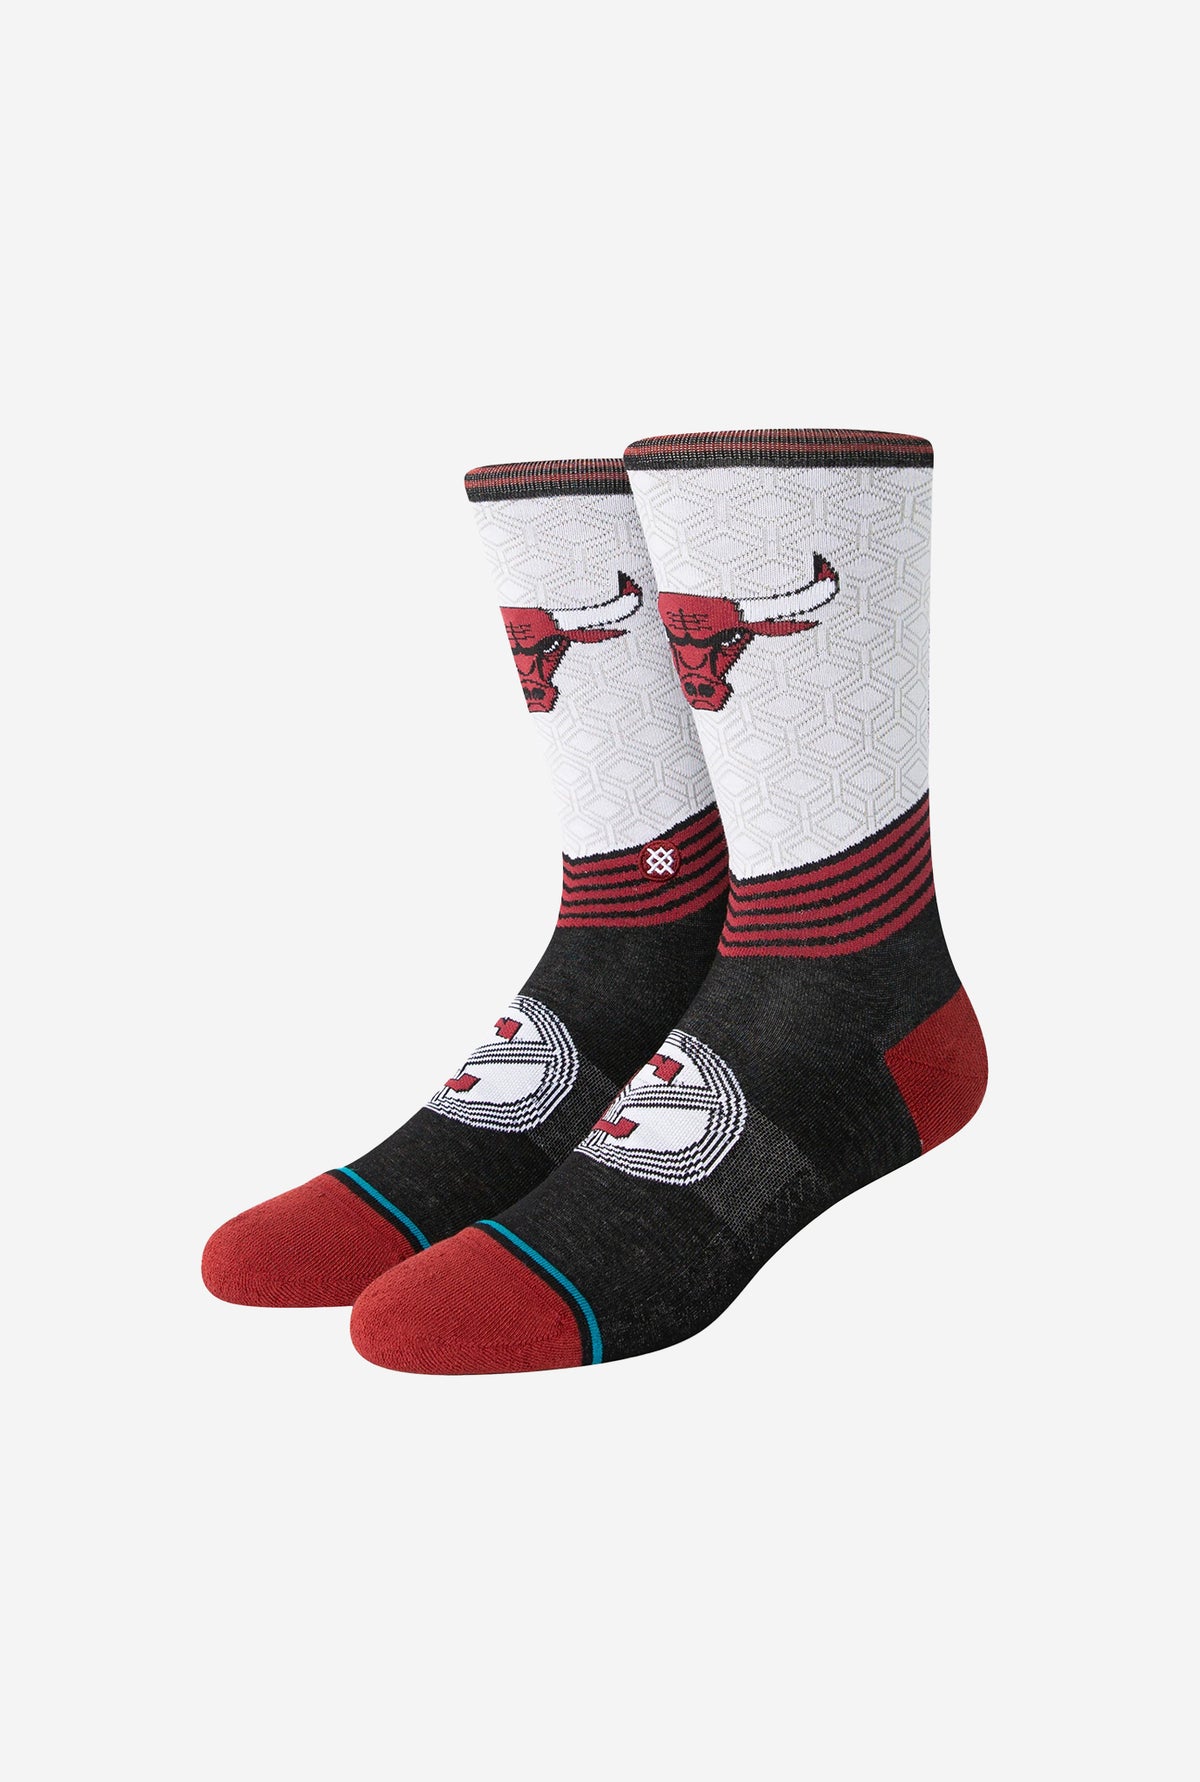 Chicago Bulls City Edition 2023 Socks